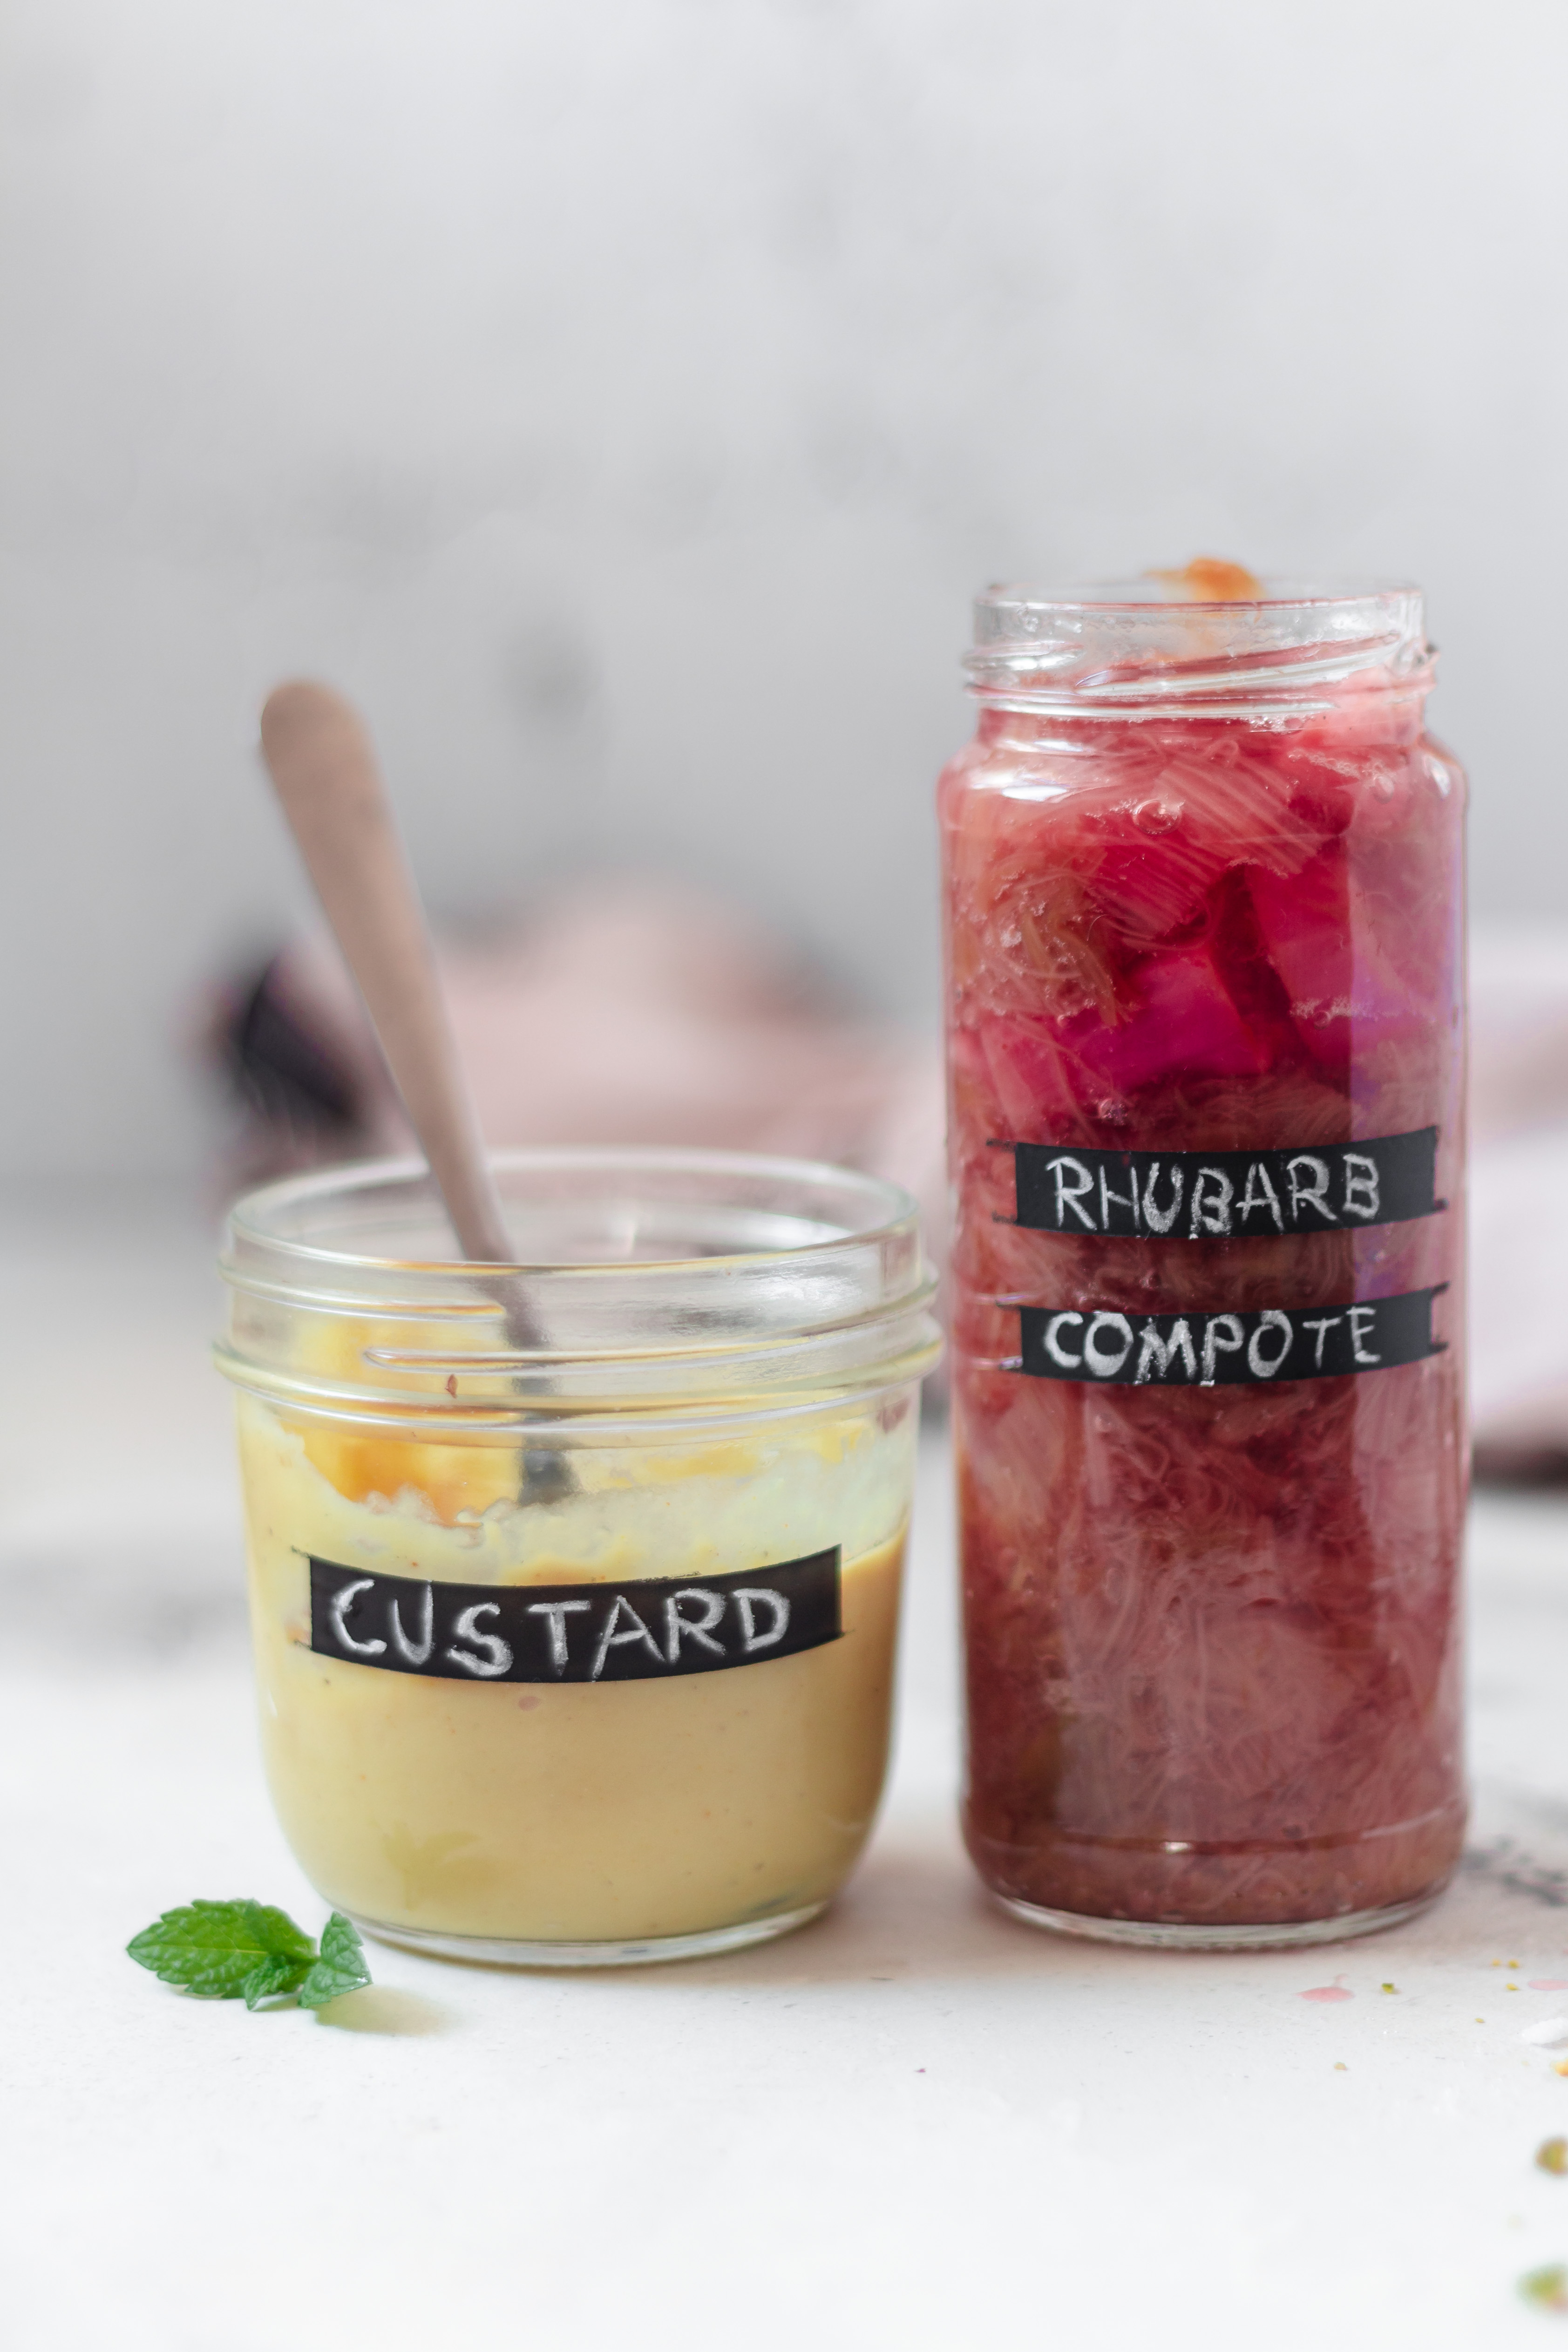 Rhubarb compote custard recipe